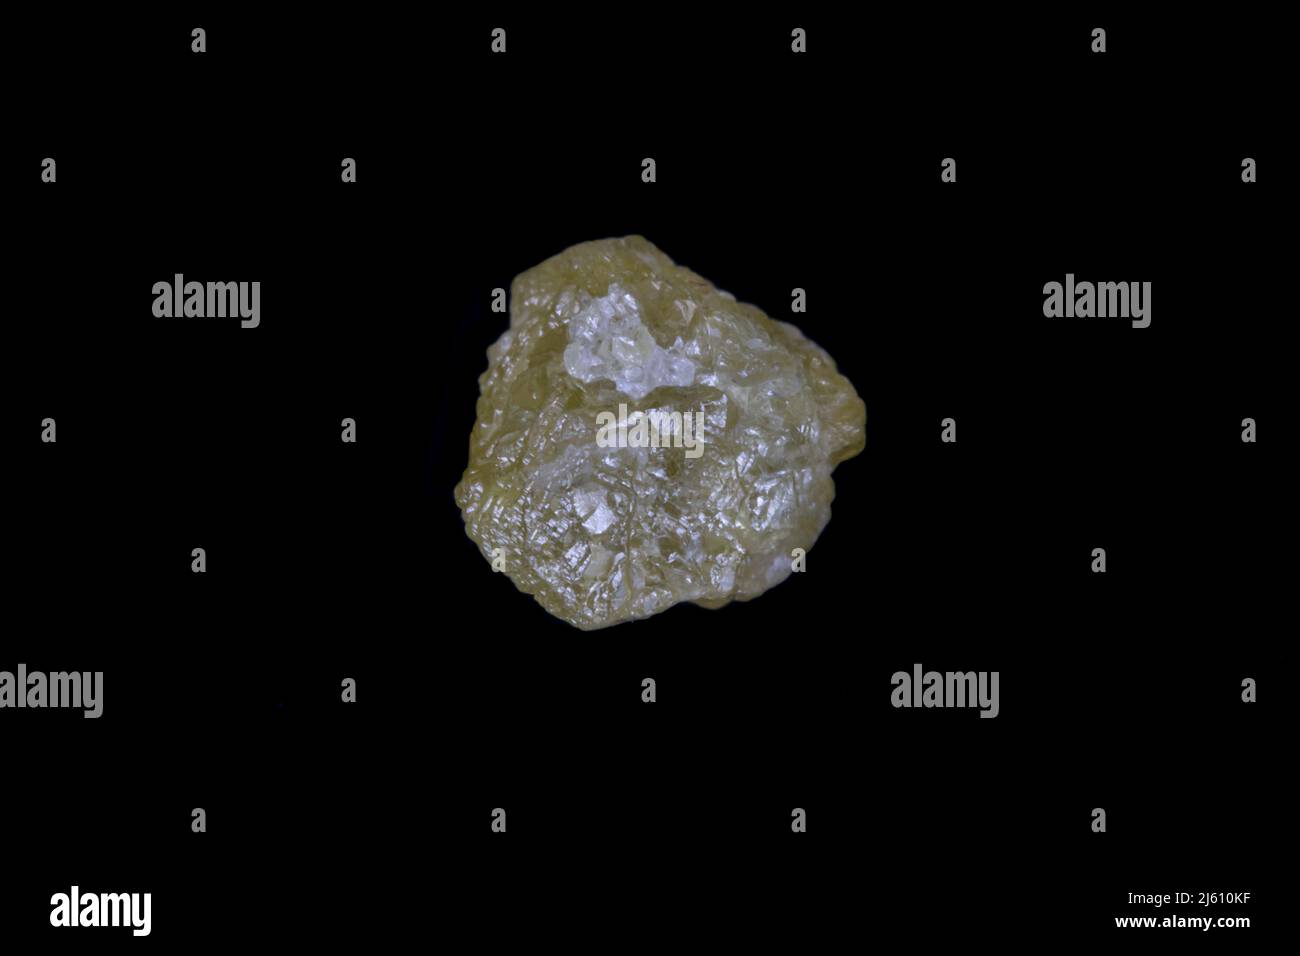 Raw, uncut yellow diamond. 5.7mm diameter, weight 1.9 carats. On Black background. Stock Photo